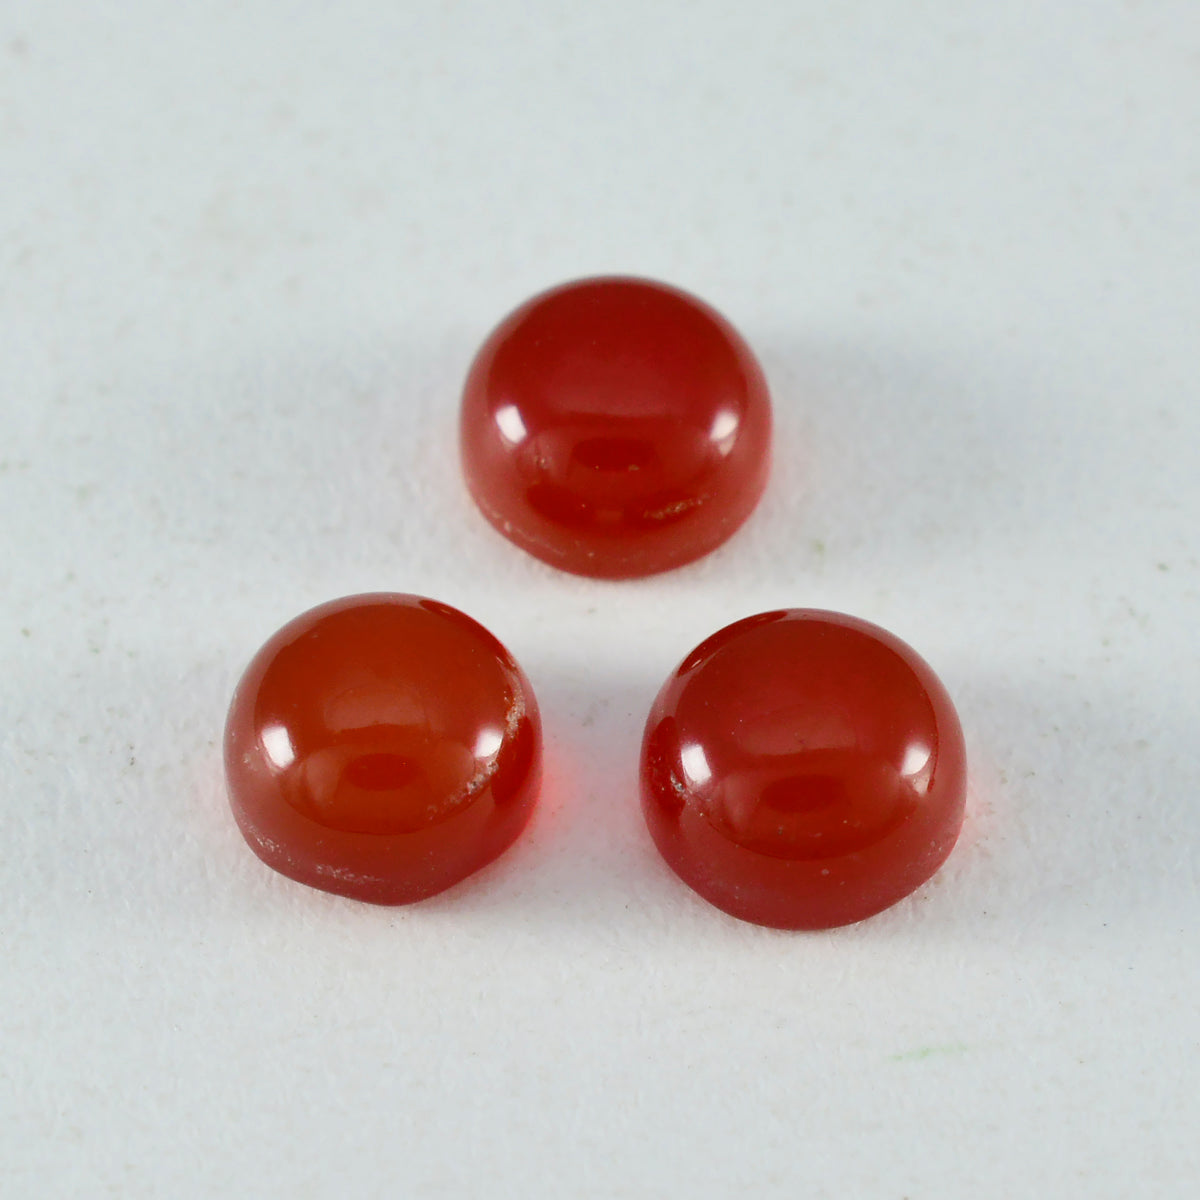 Riyogems 1PC Red Onyx Cabochon 11x11 mm Round Shape awesome Quality Loose Gems